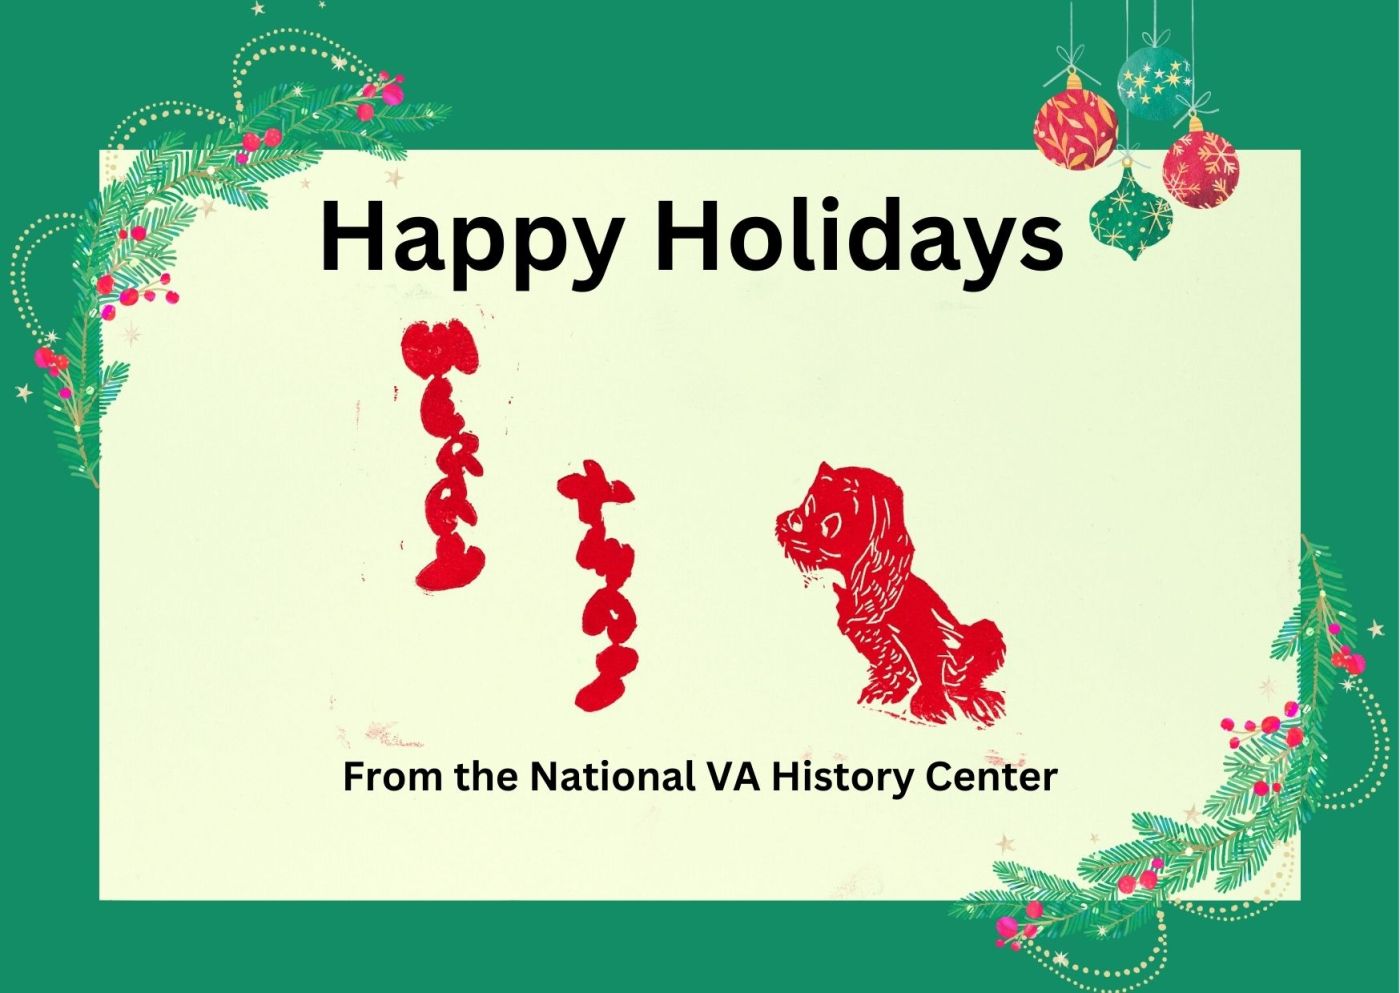 Happy Holidays from the National VA History Center. (Graphic by VA)